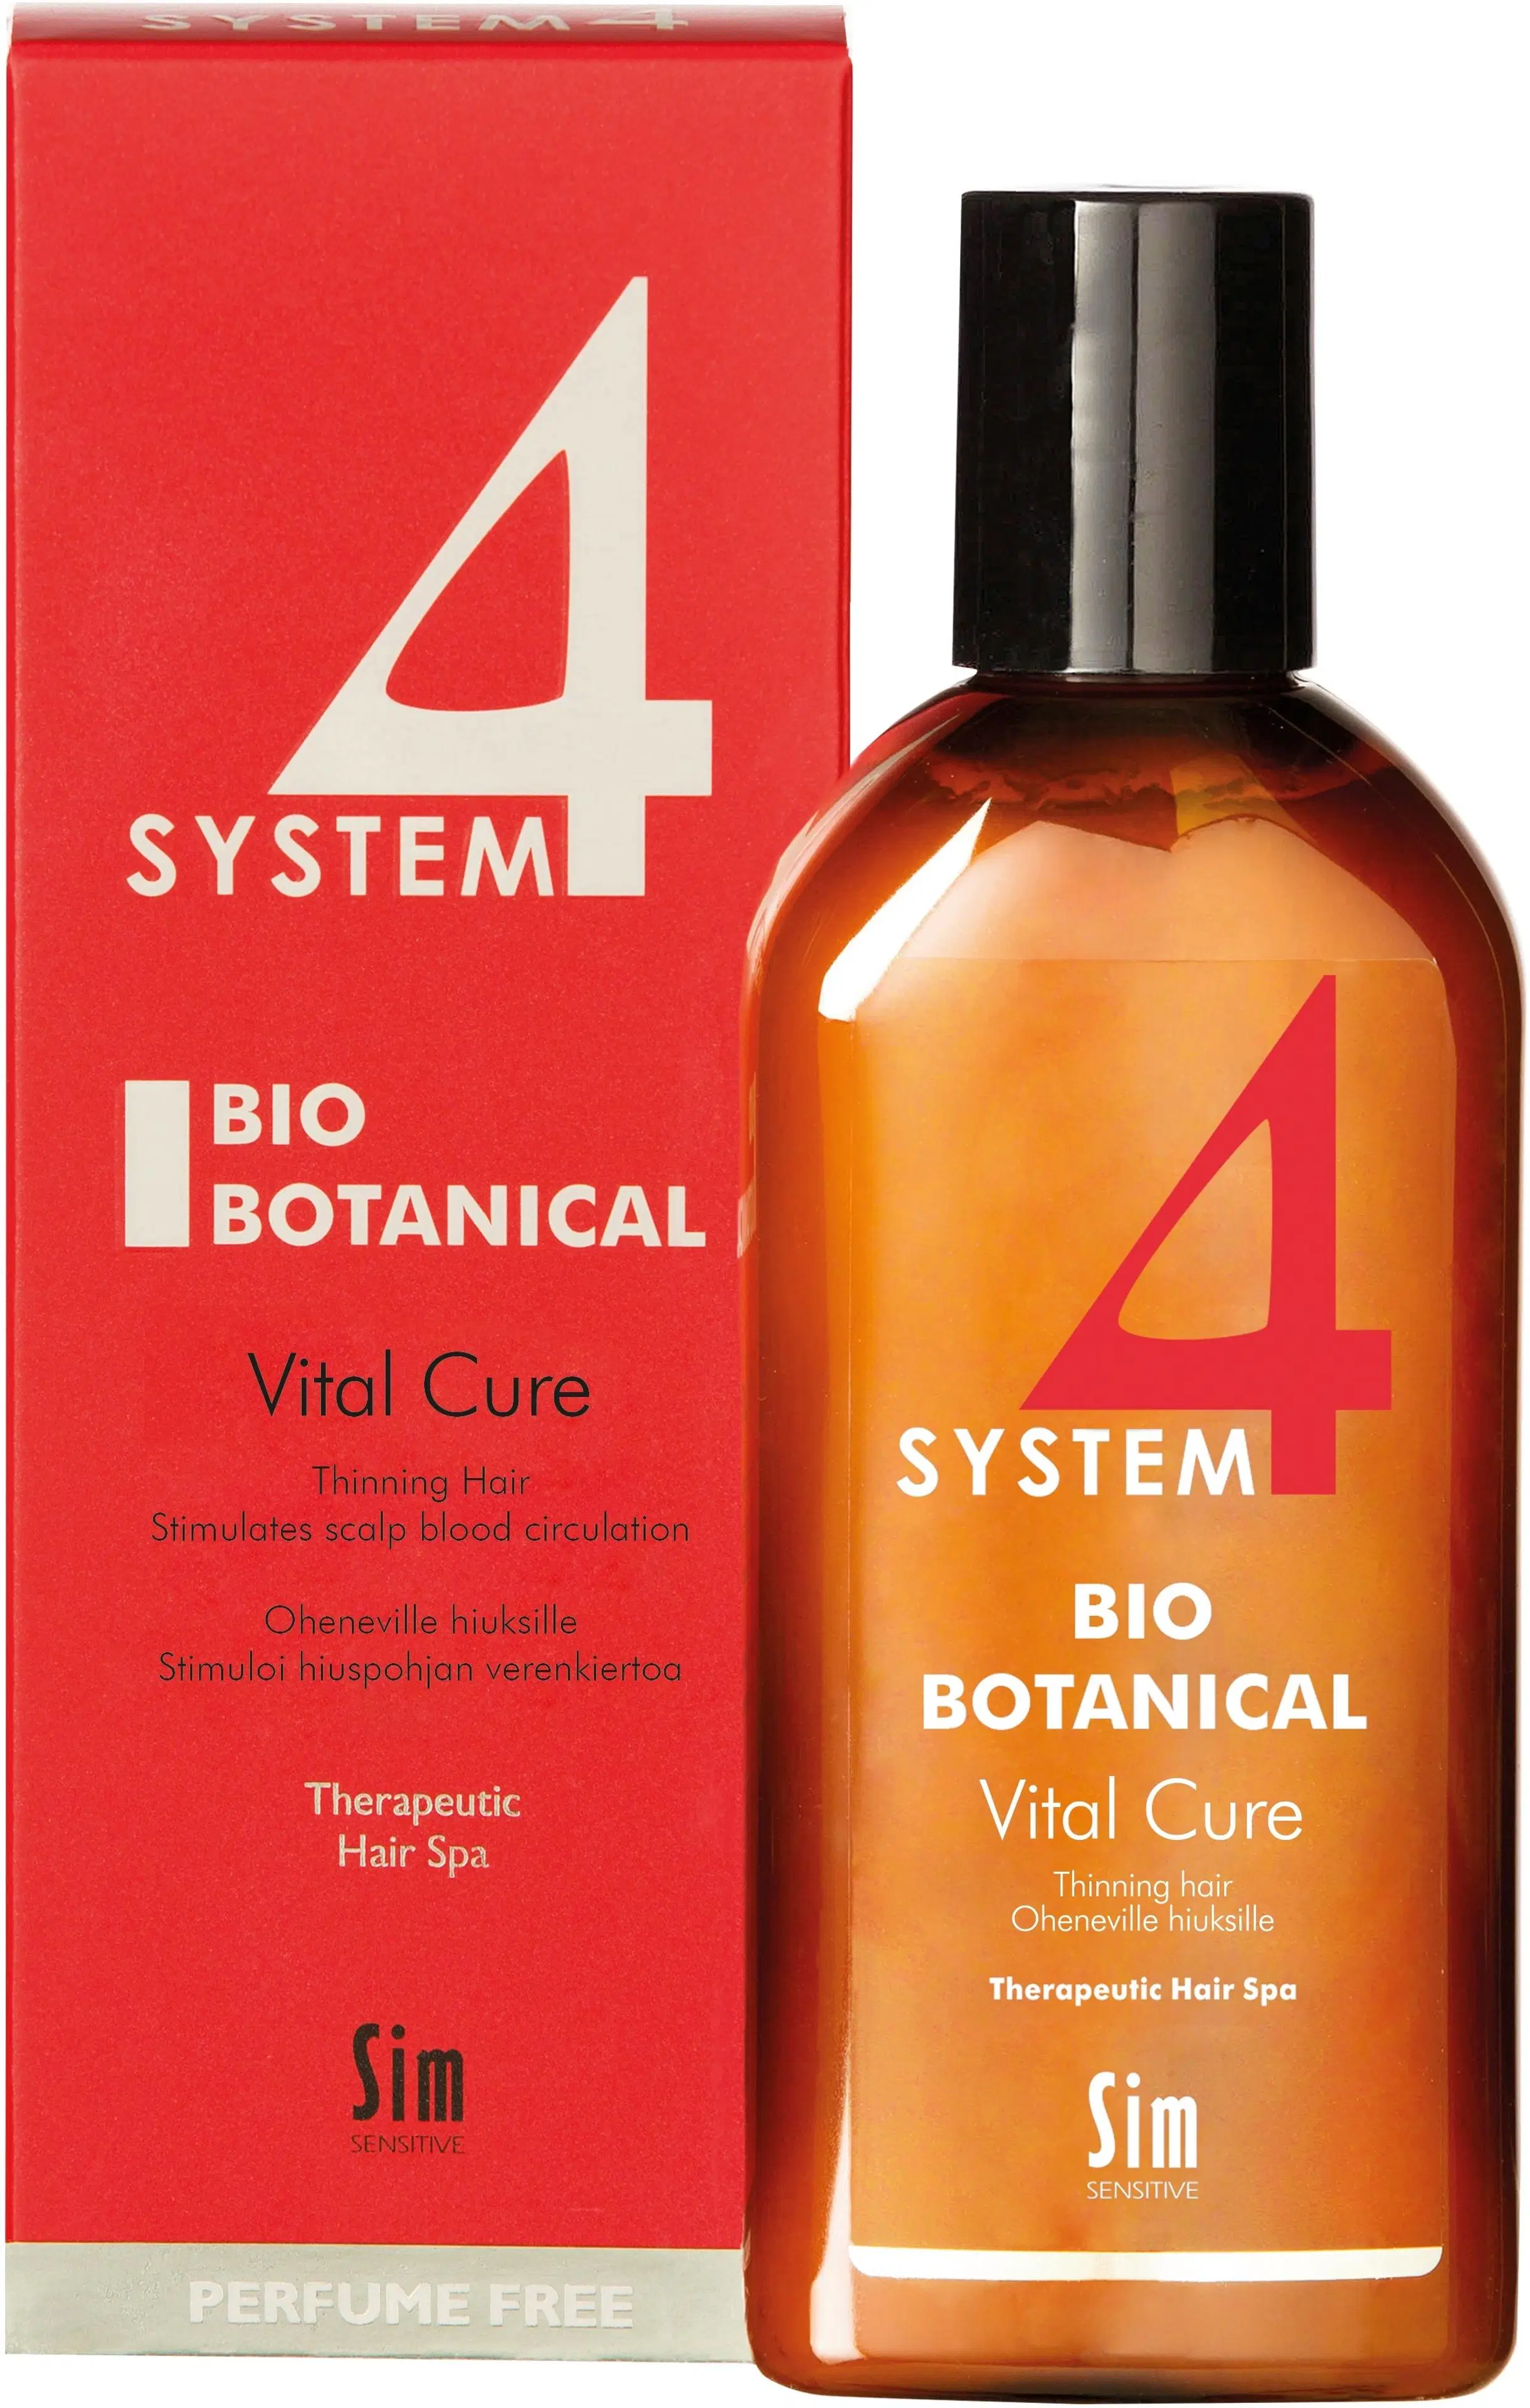 System4 Bio Botanical Vital Cure hoitoaine 215 ml